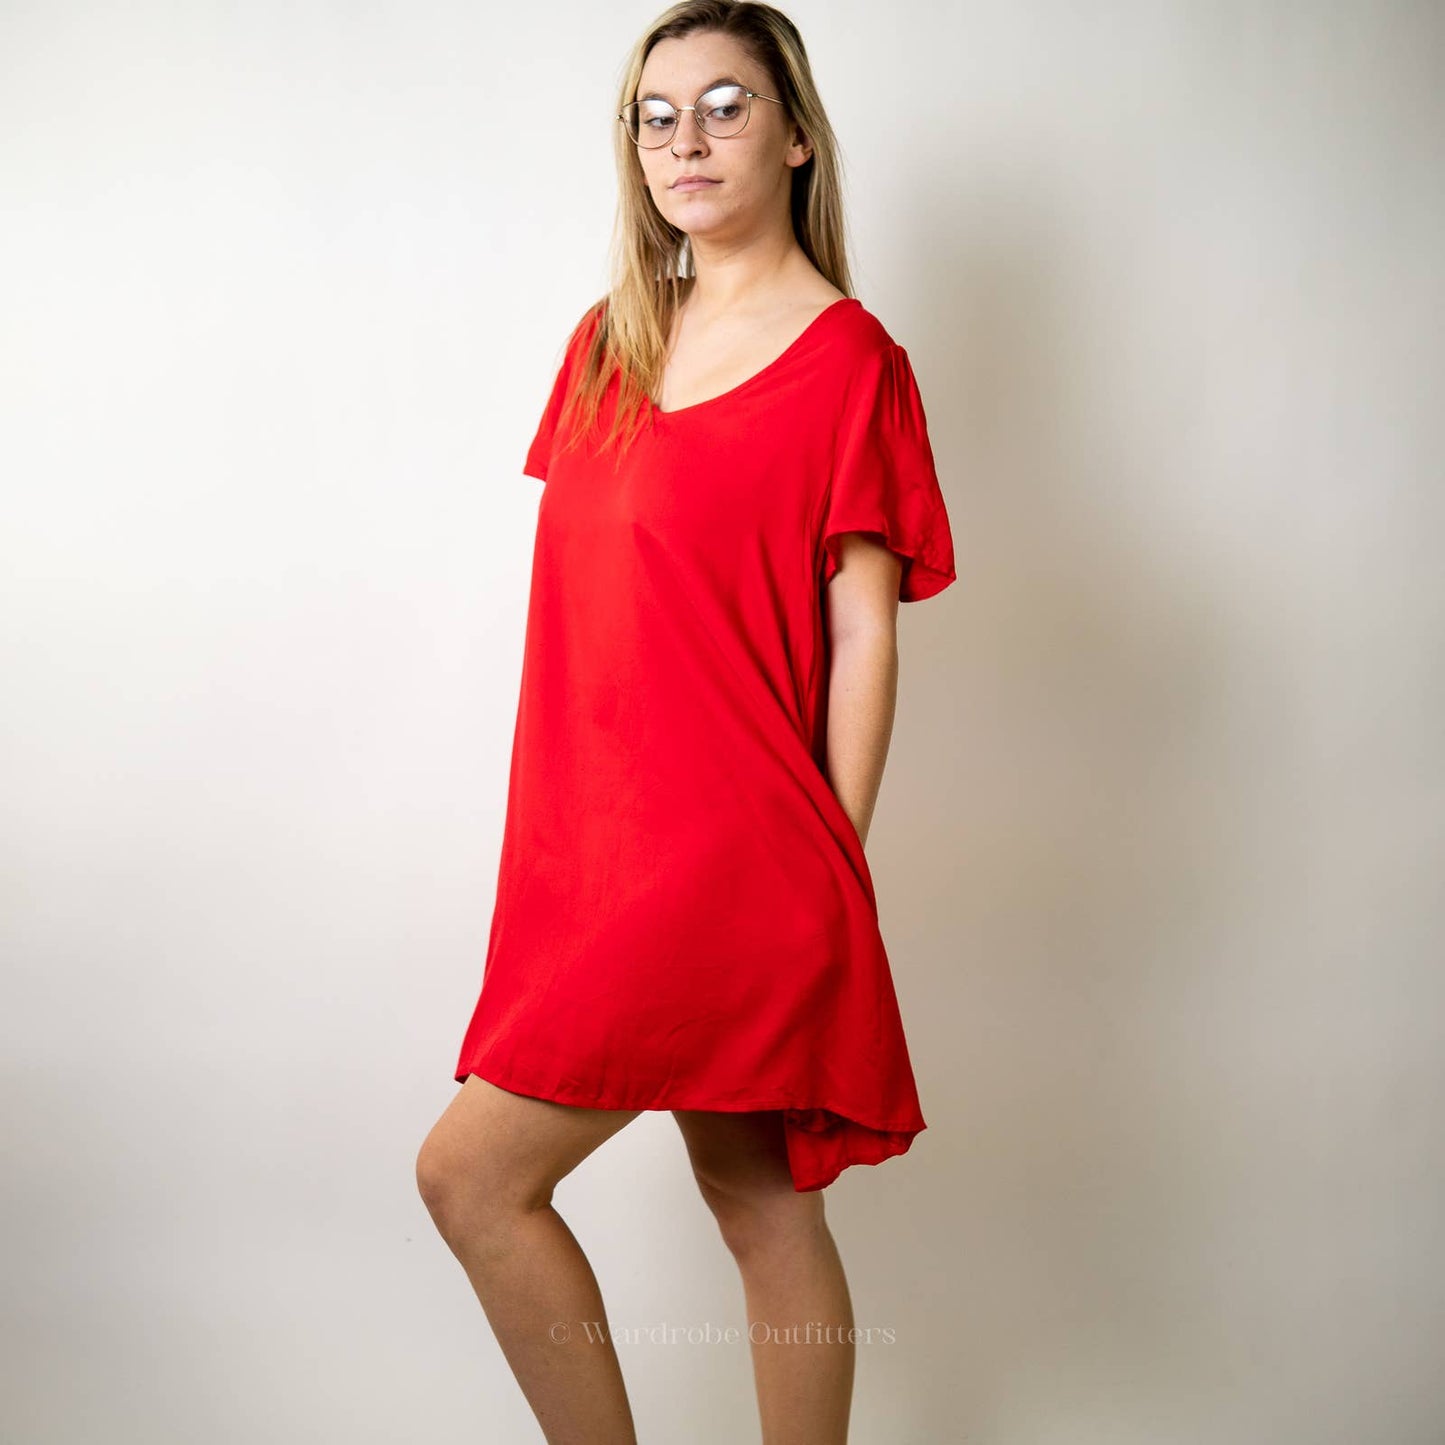 Hinge Bright Red Mini Dress - S